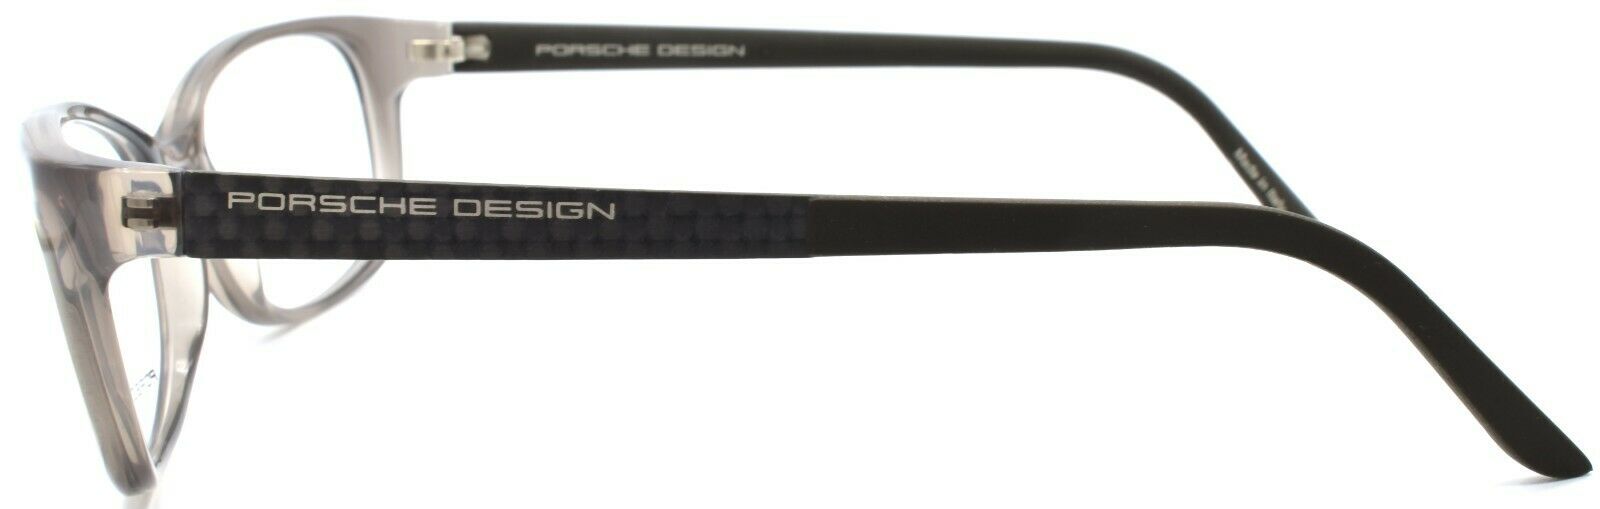 3-Porsche Design P8247 C Women's Eyeglasses Frames 55-16-135 Grey-4046901717230-IKSpecs